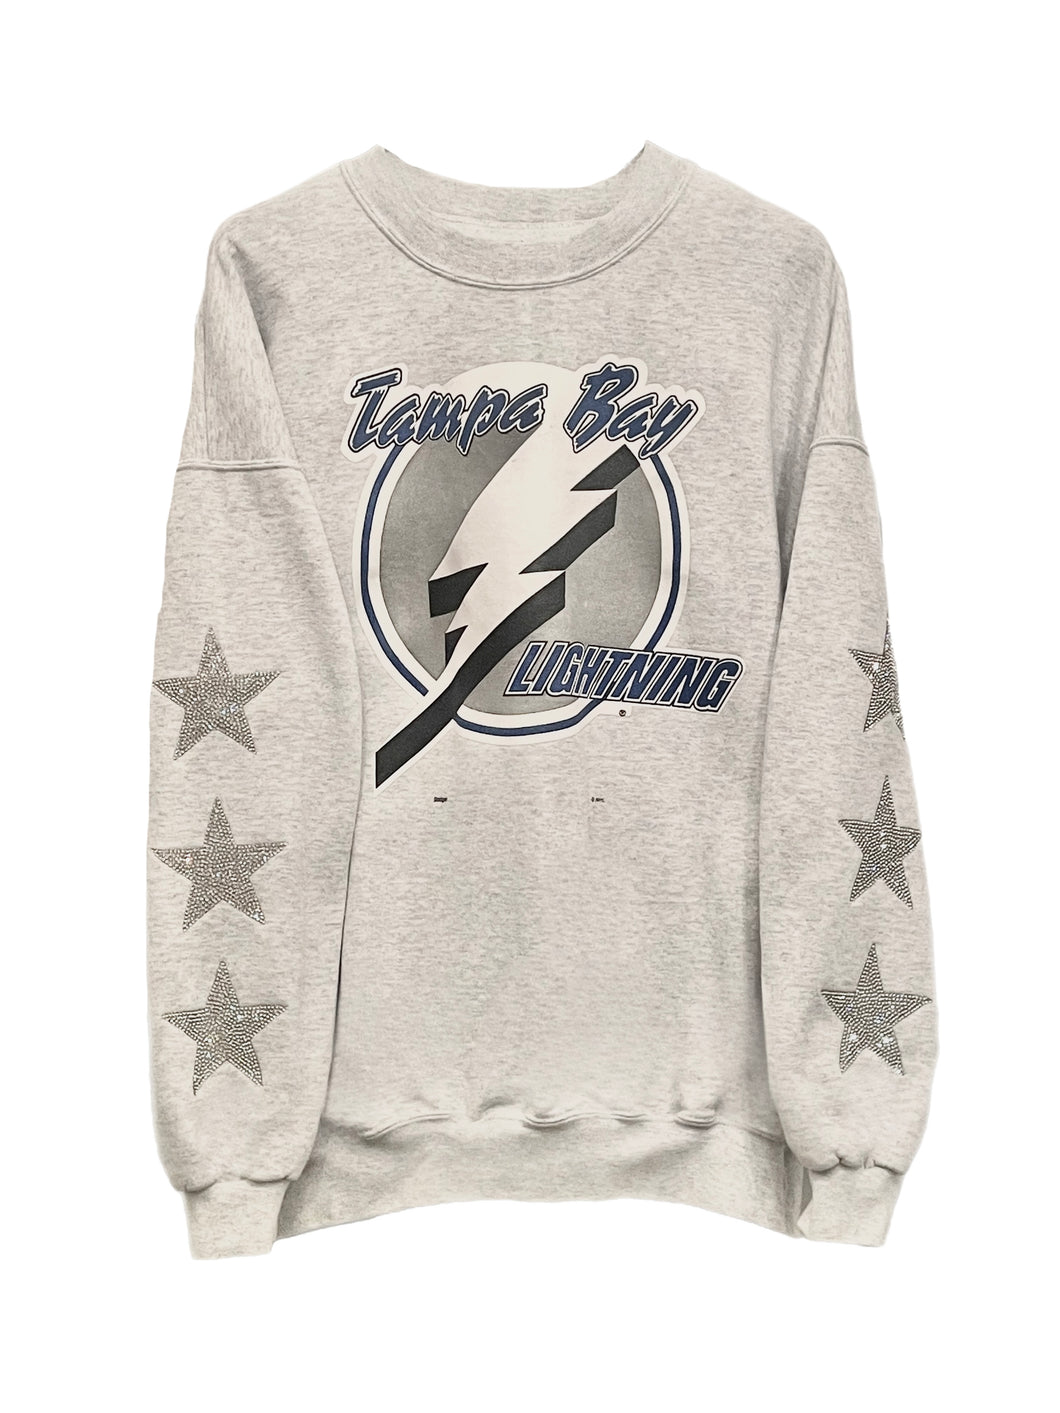 Tampa Bay Lightning, NHL One of a KIND Vintage Sweatshirt with Three Crystal Star Design, Custom Crystal Name & Number